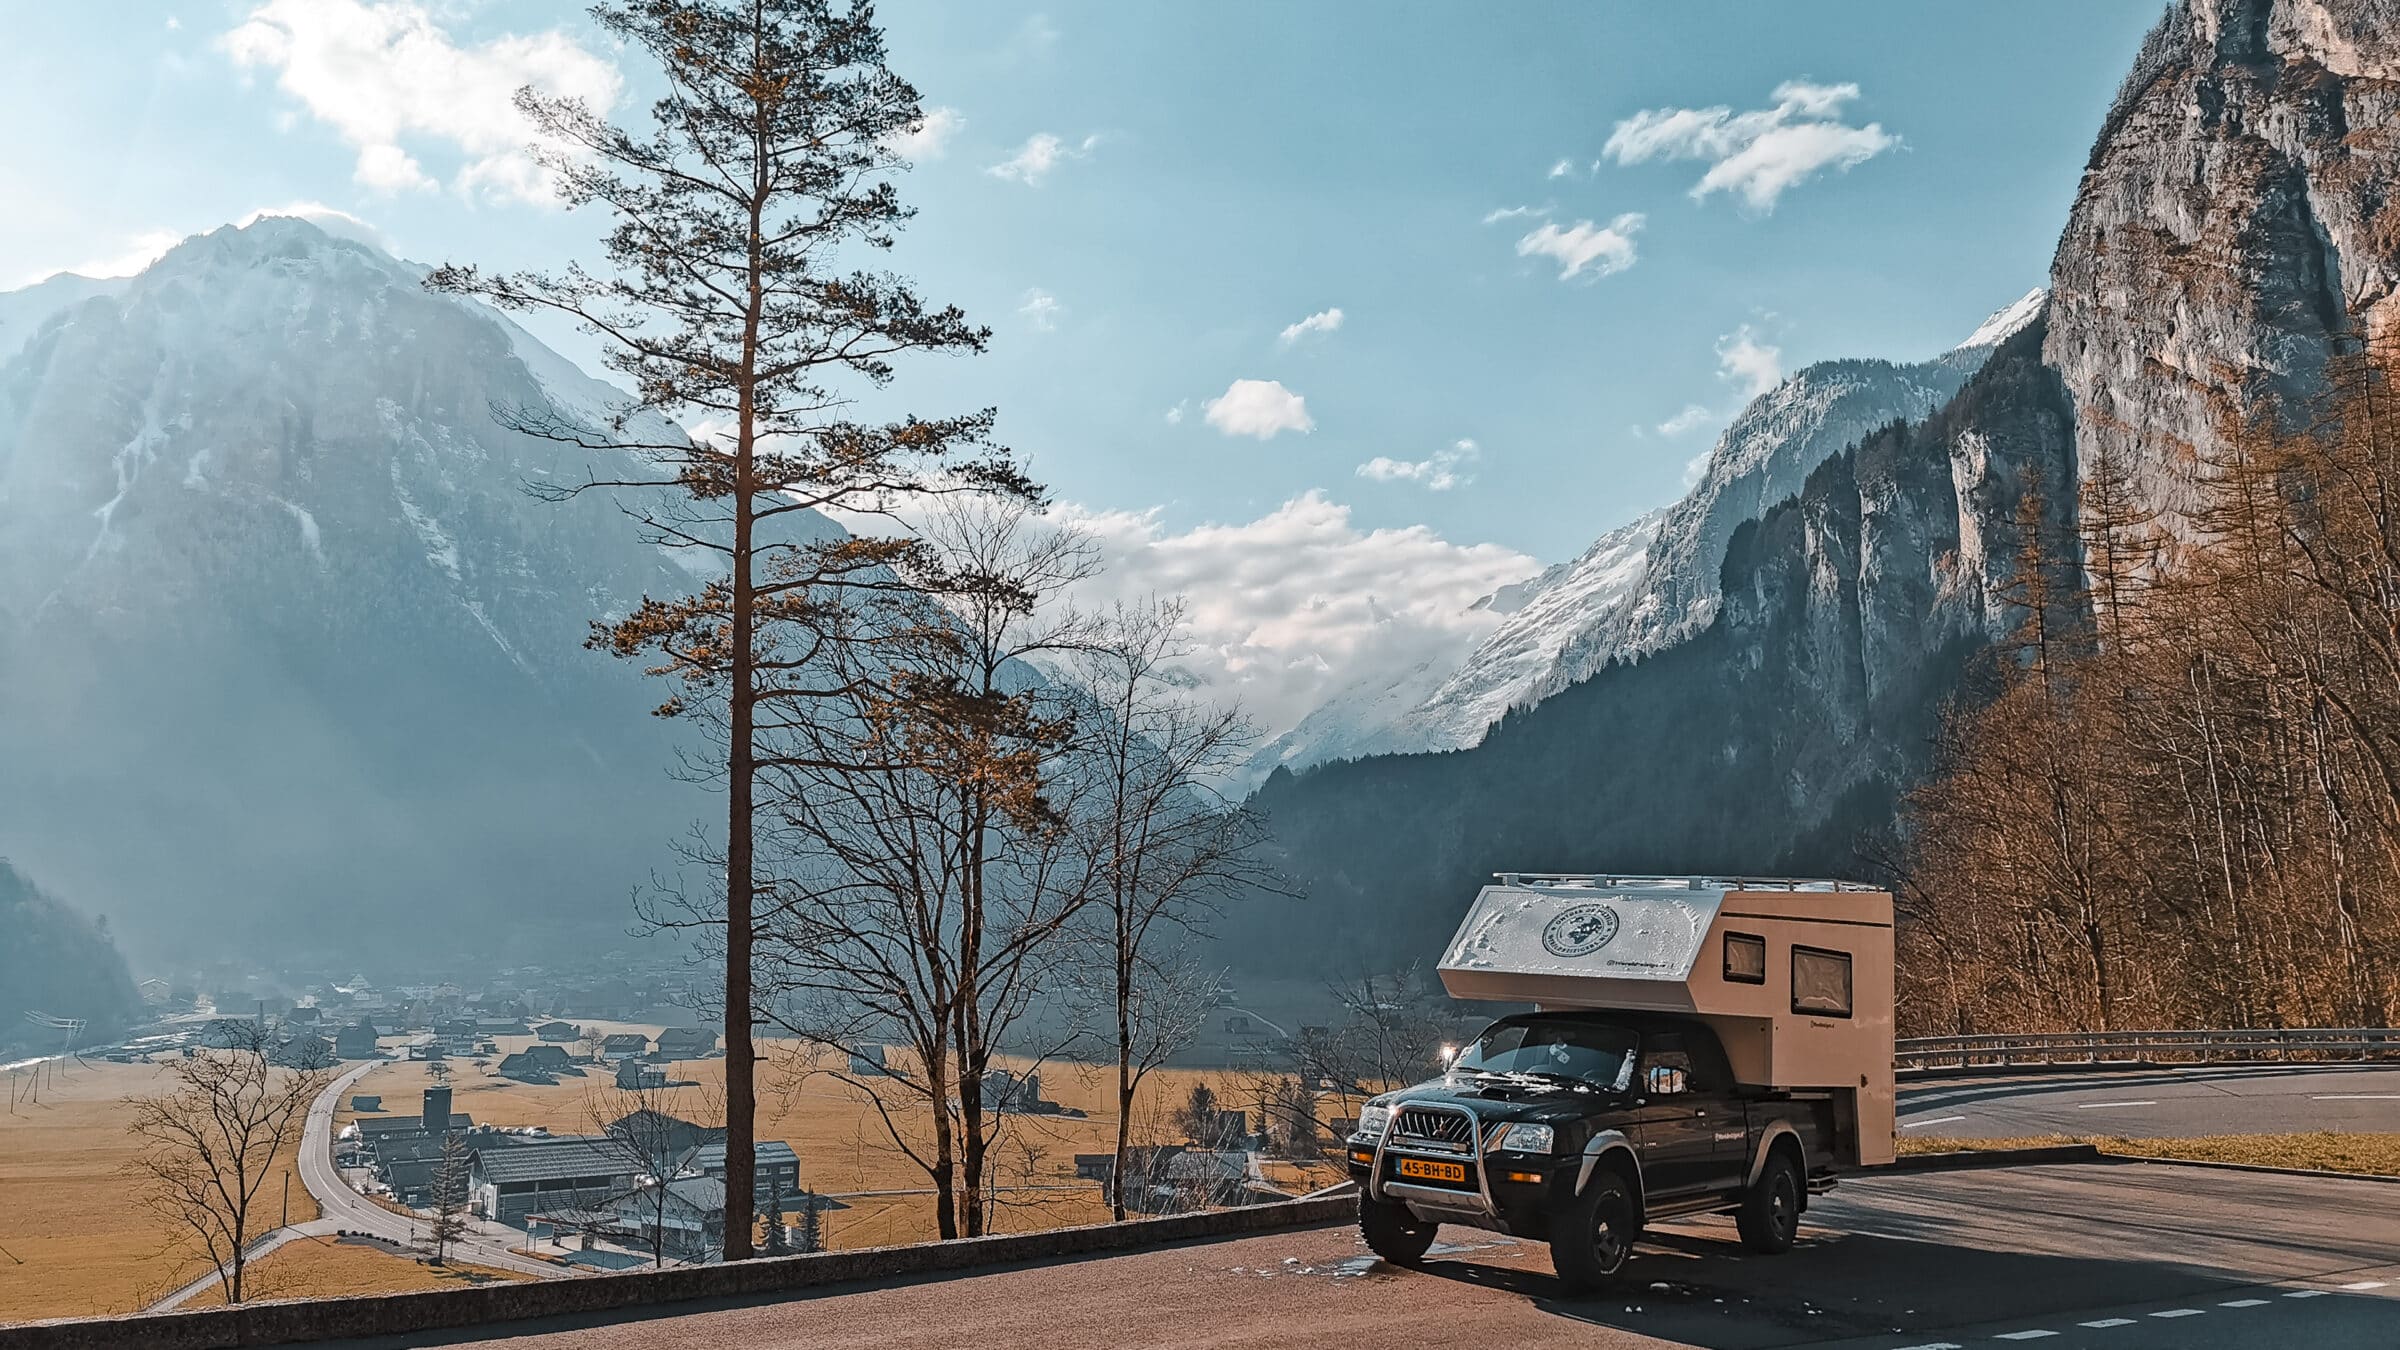 Världens resenärer 4x4 husbil under roadtrip genom Schweiz